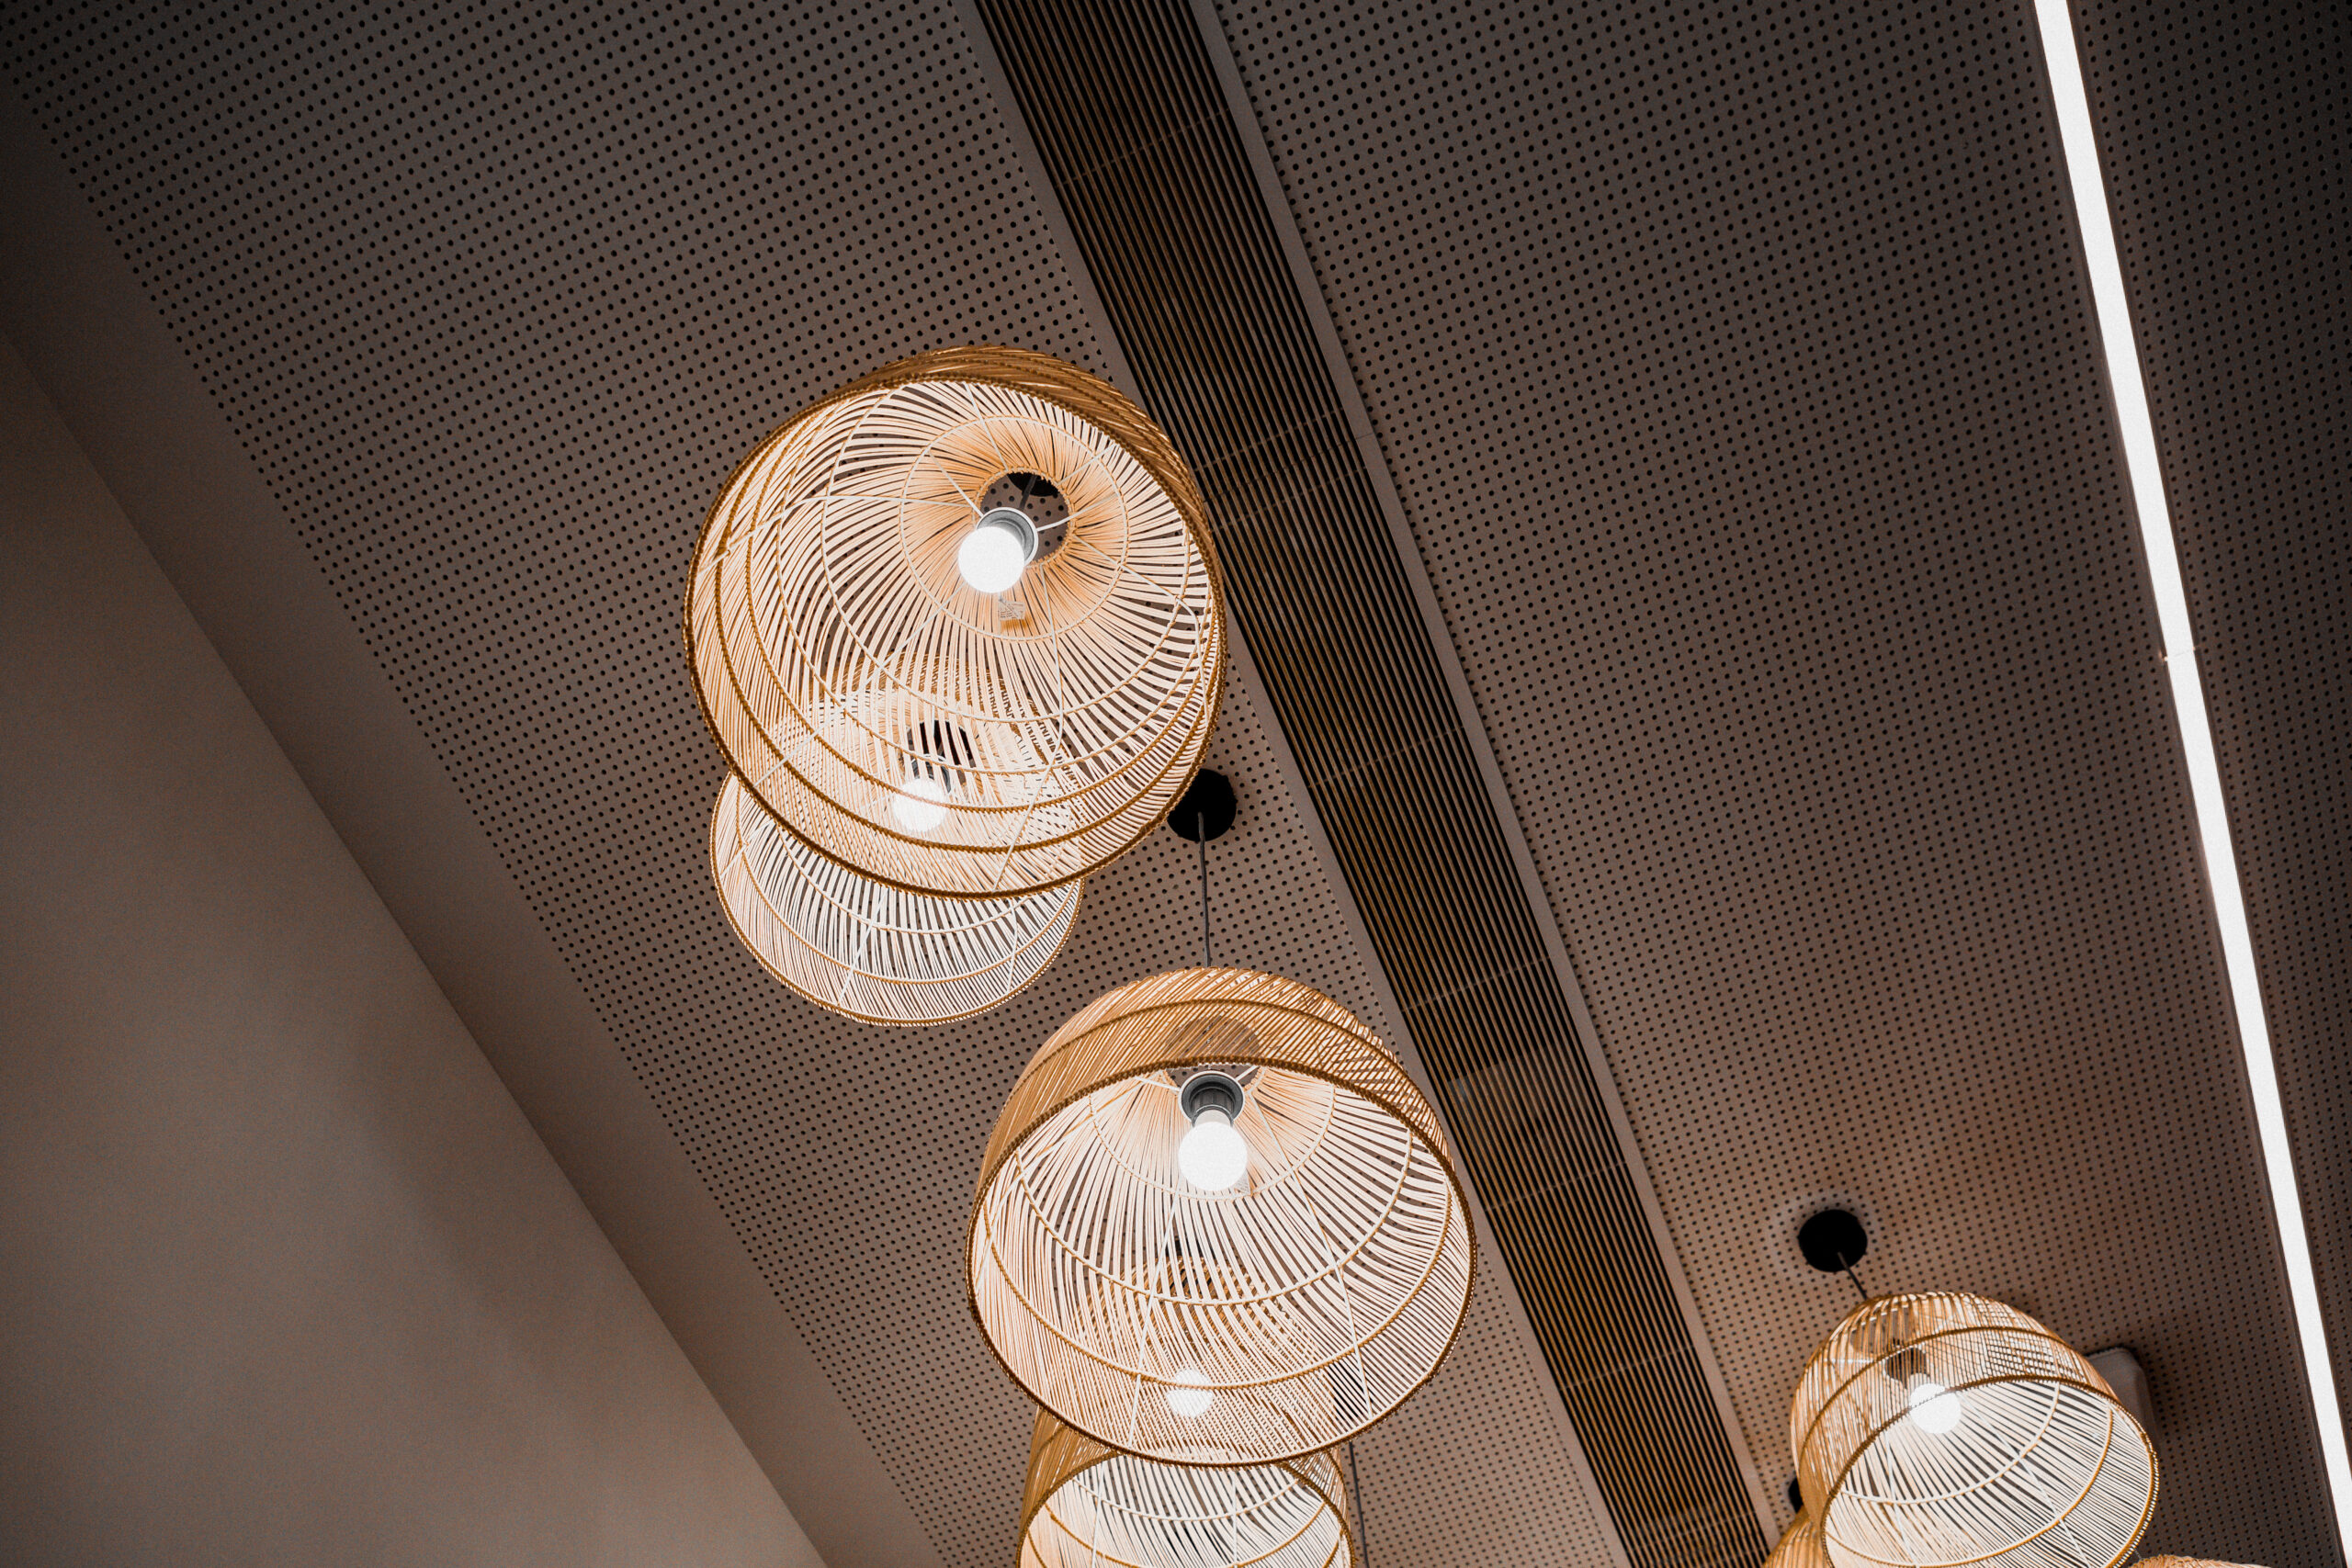 LED Downlight Installation Sydney | Charlie Sparks Electrical Services